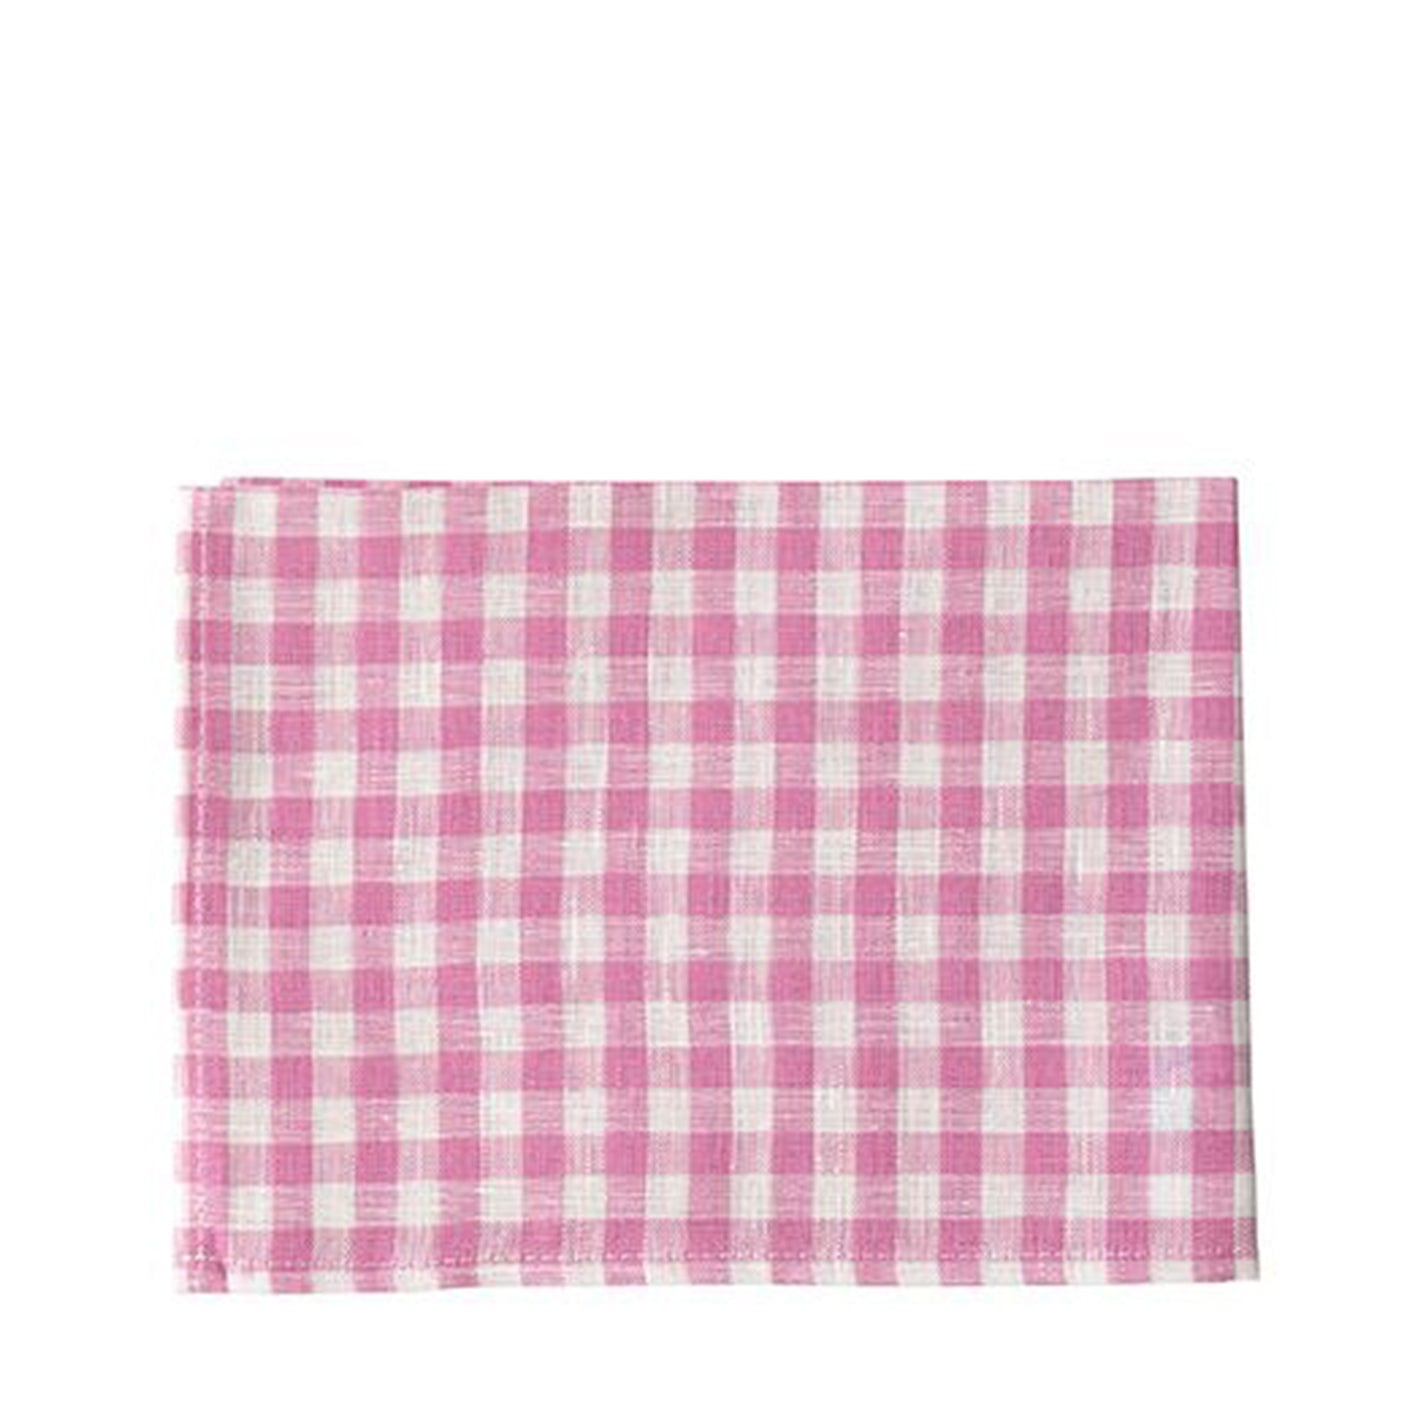 Fog Linen Work Tea Towel - Pink Check